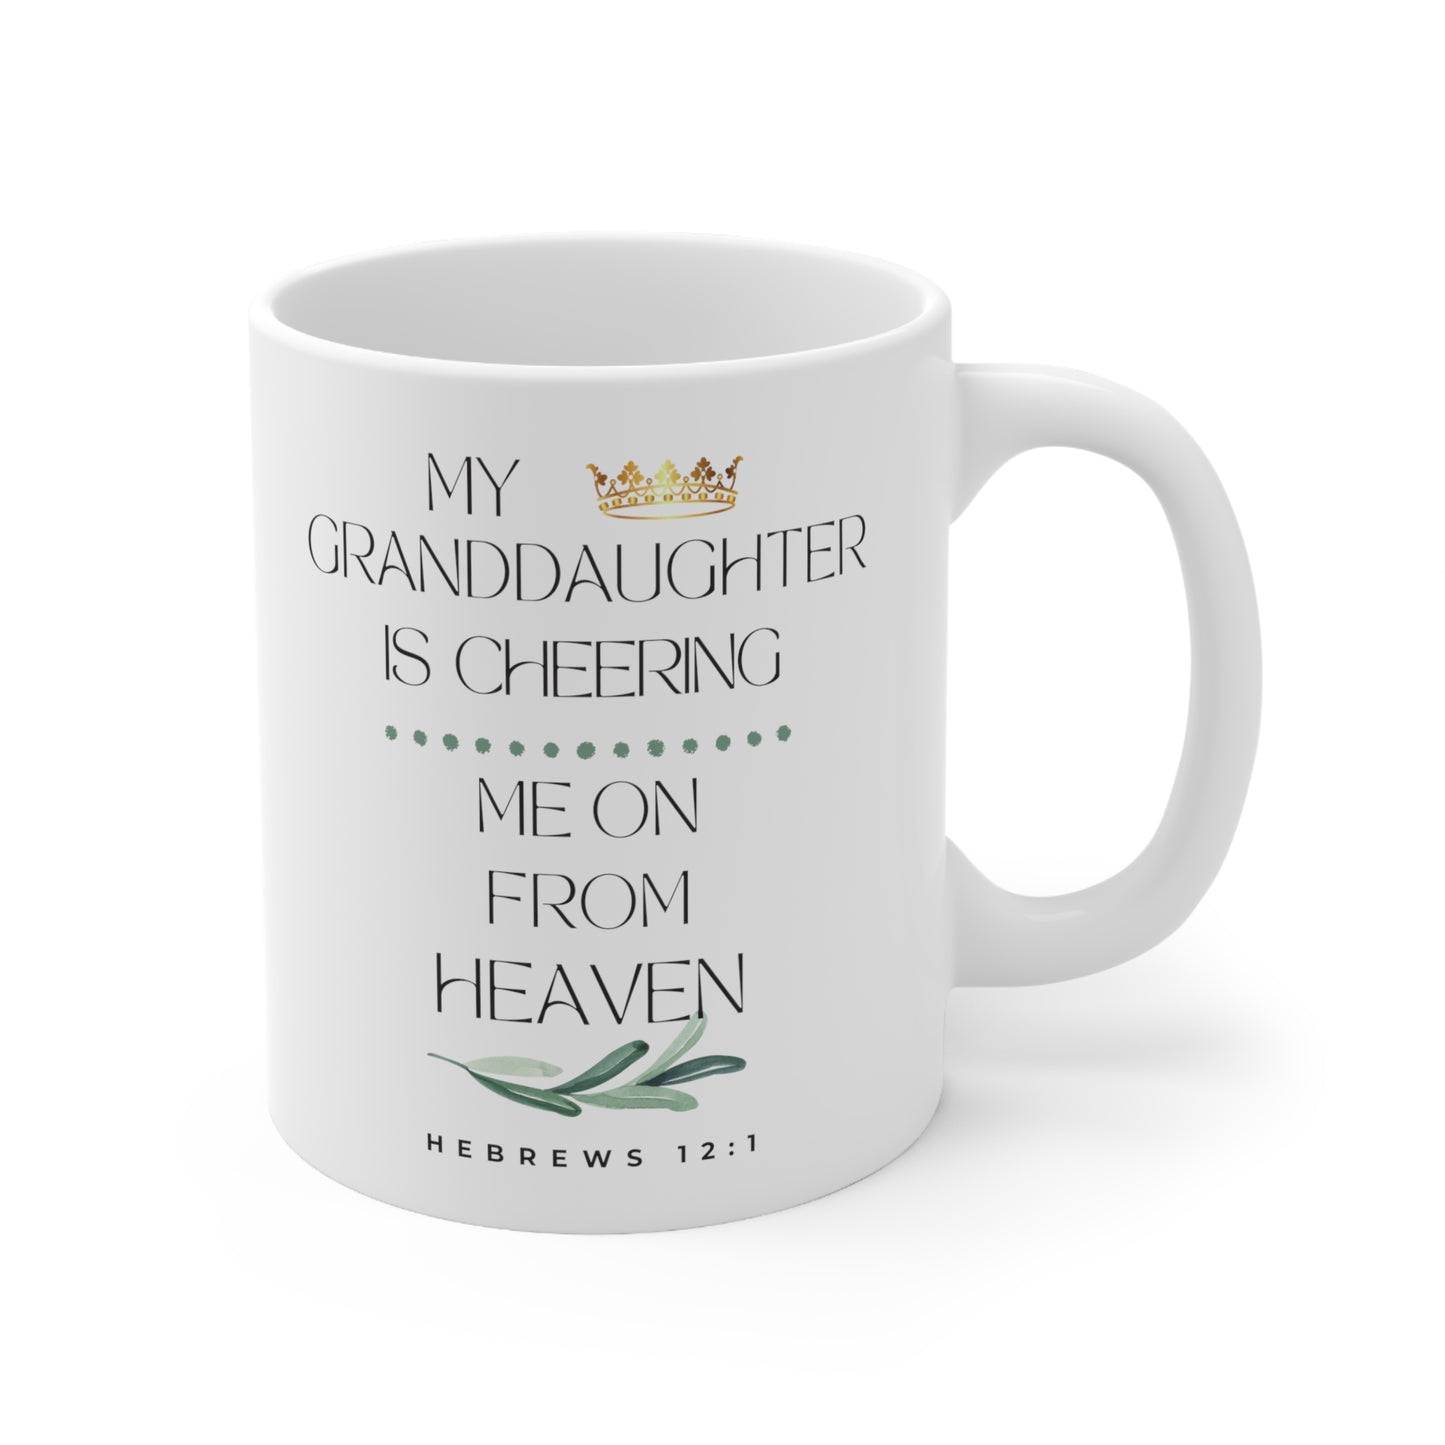 Granddaughter Memorial Gift Mug, Cheering Me on from Heaven